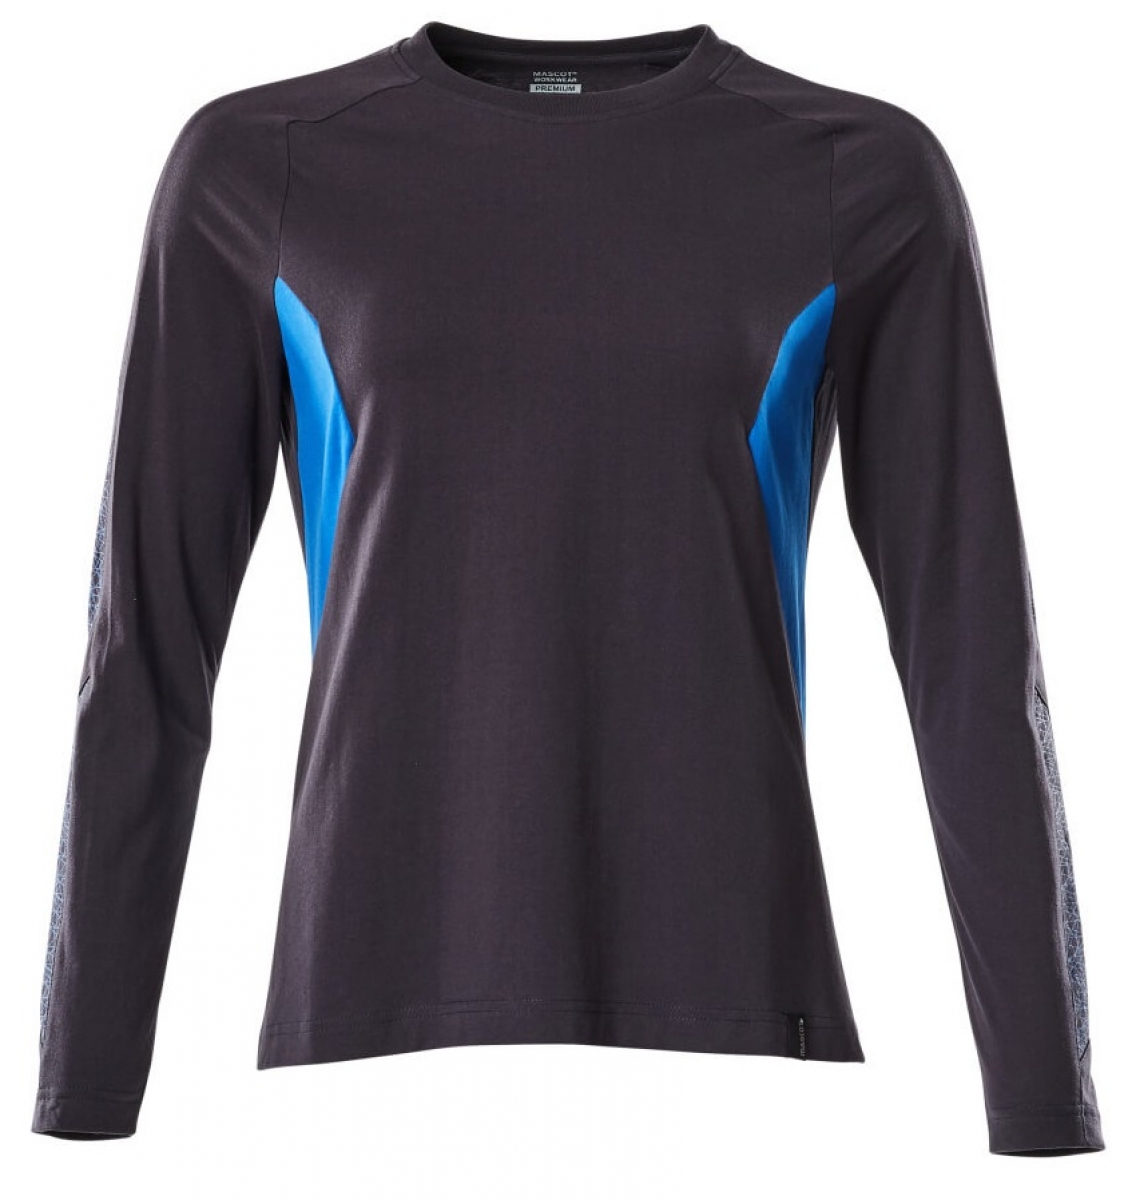 MASCOT-Worker-Shirts, Damen-T-Shirt, langarm, ACCELERATE, 195 g/m, schwarzblau/azurblau